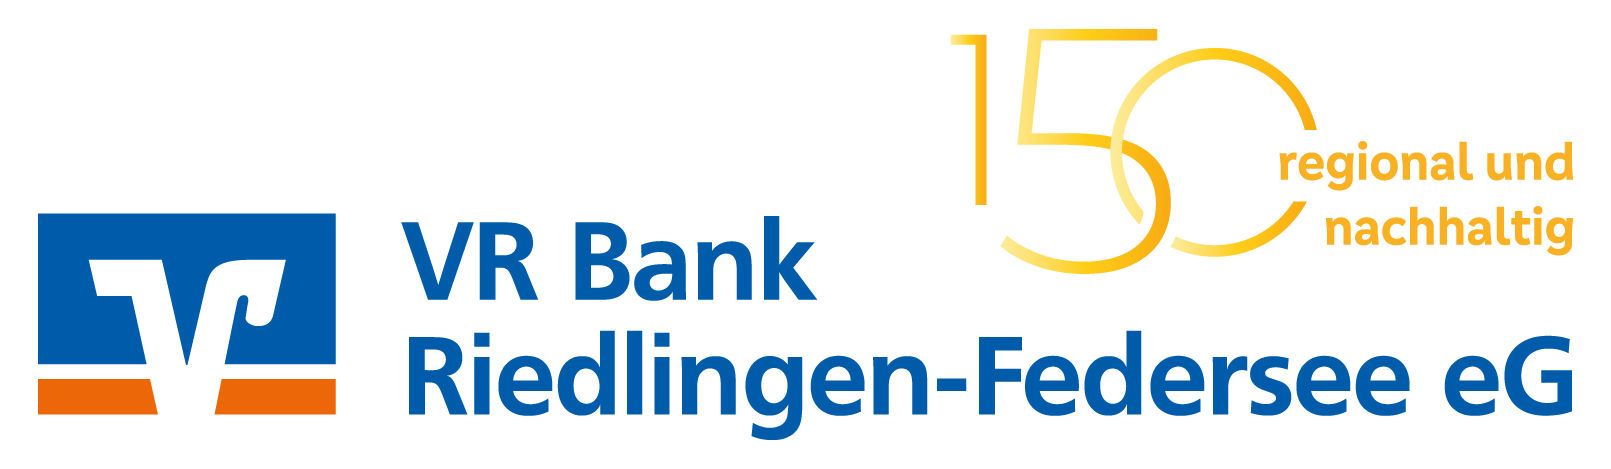 VR Bank Riedlingen-Federsee eG